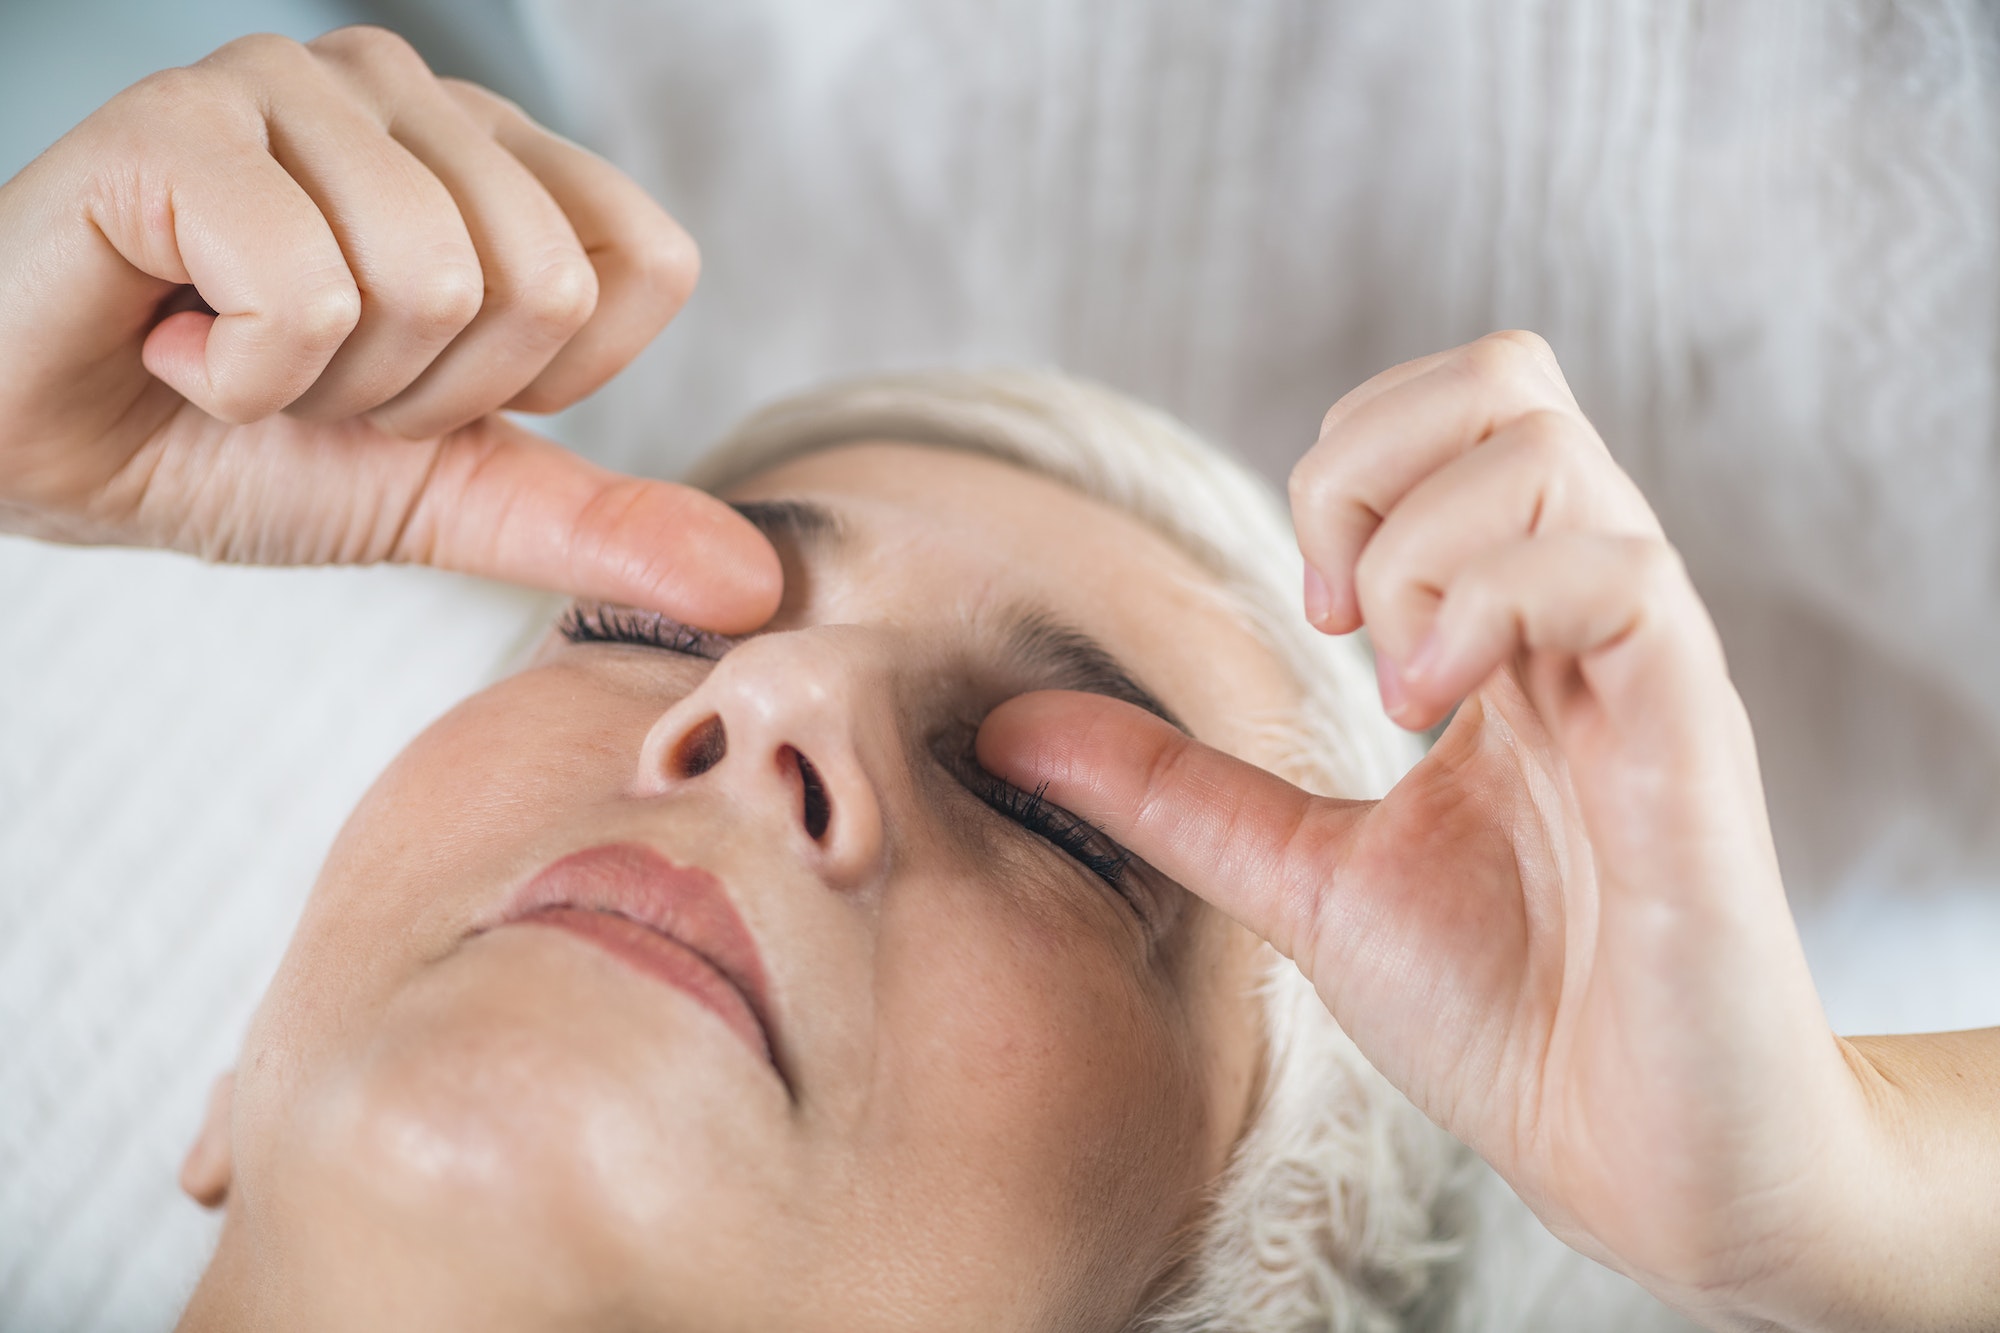 Treatments around the eyes